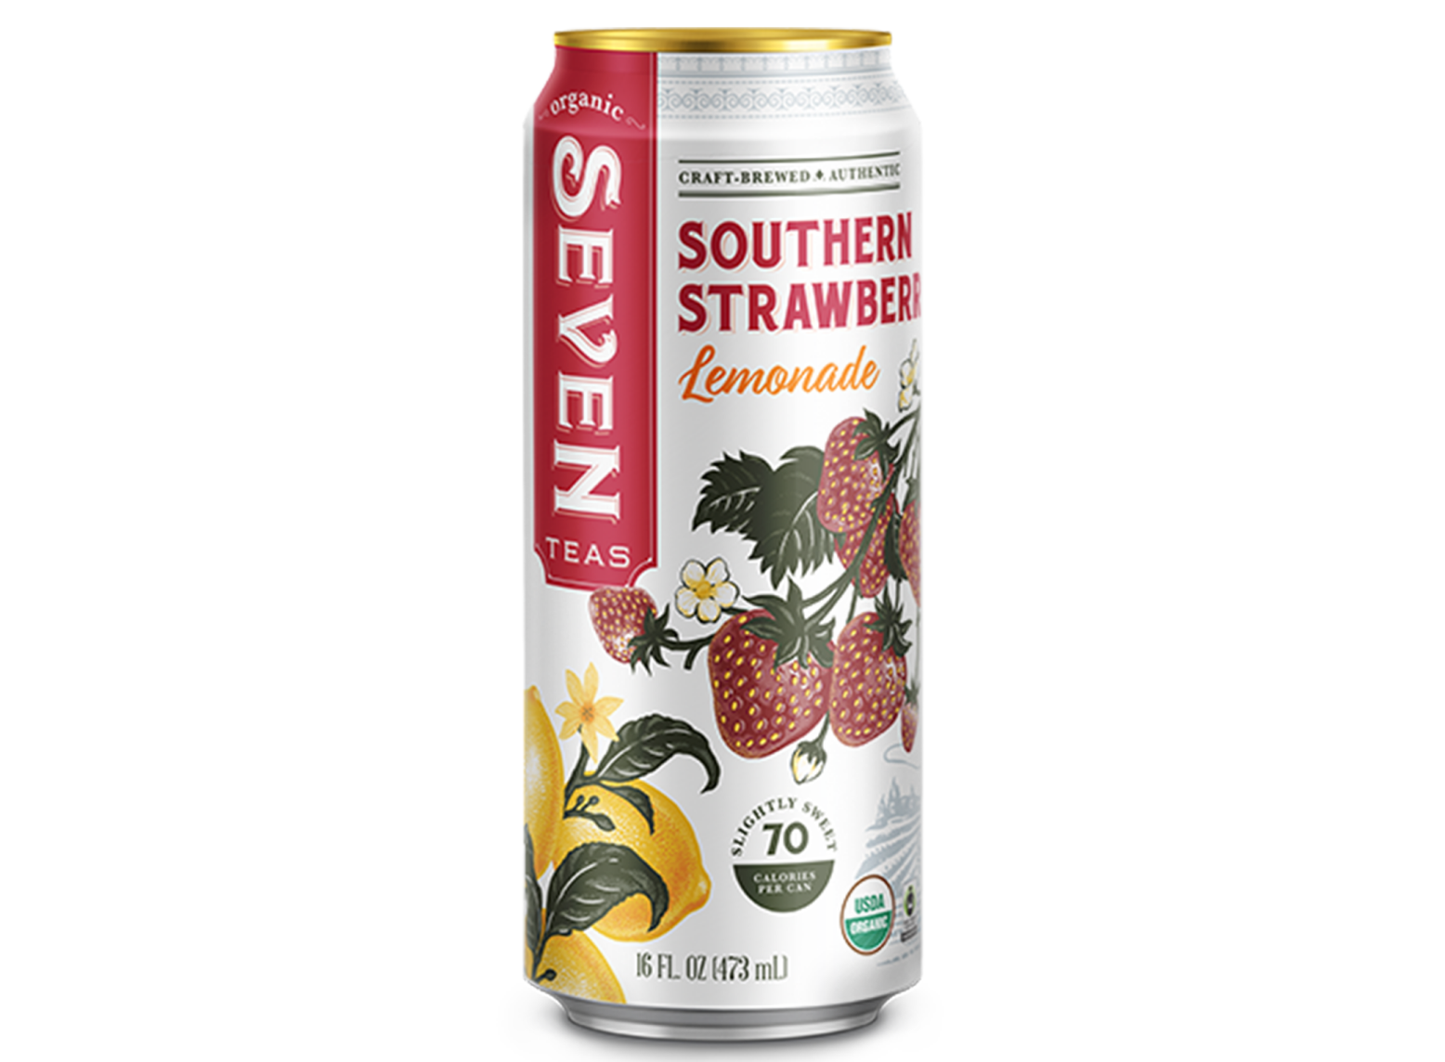 Southern Strawberry Lemonade